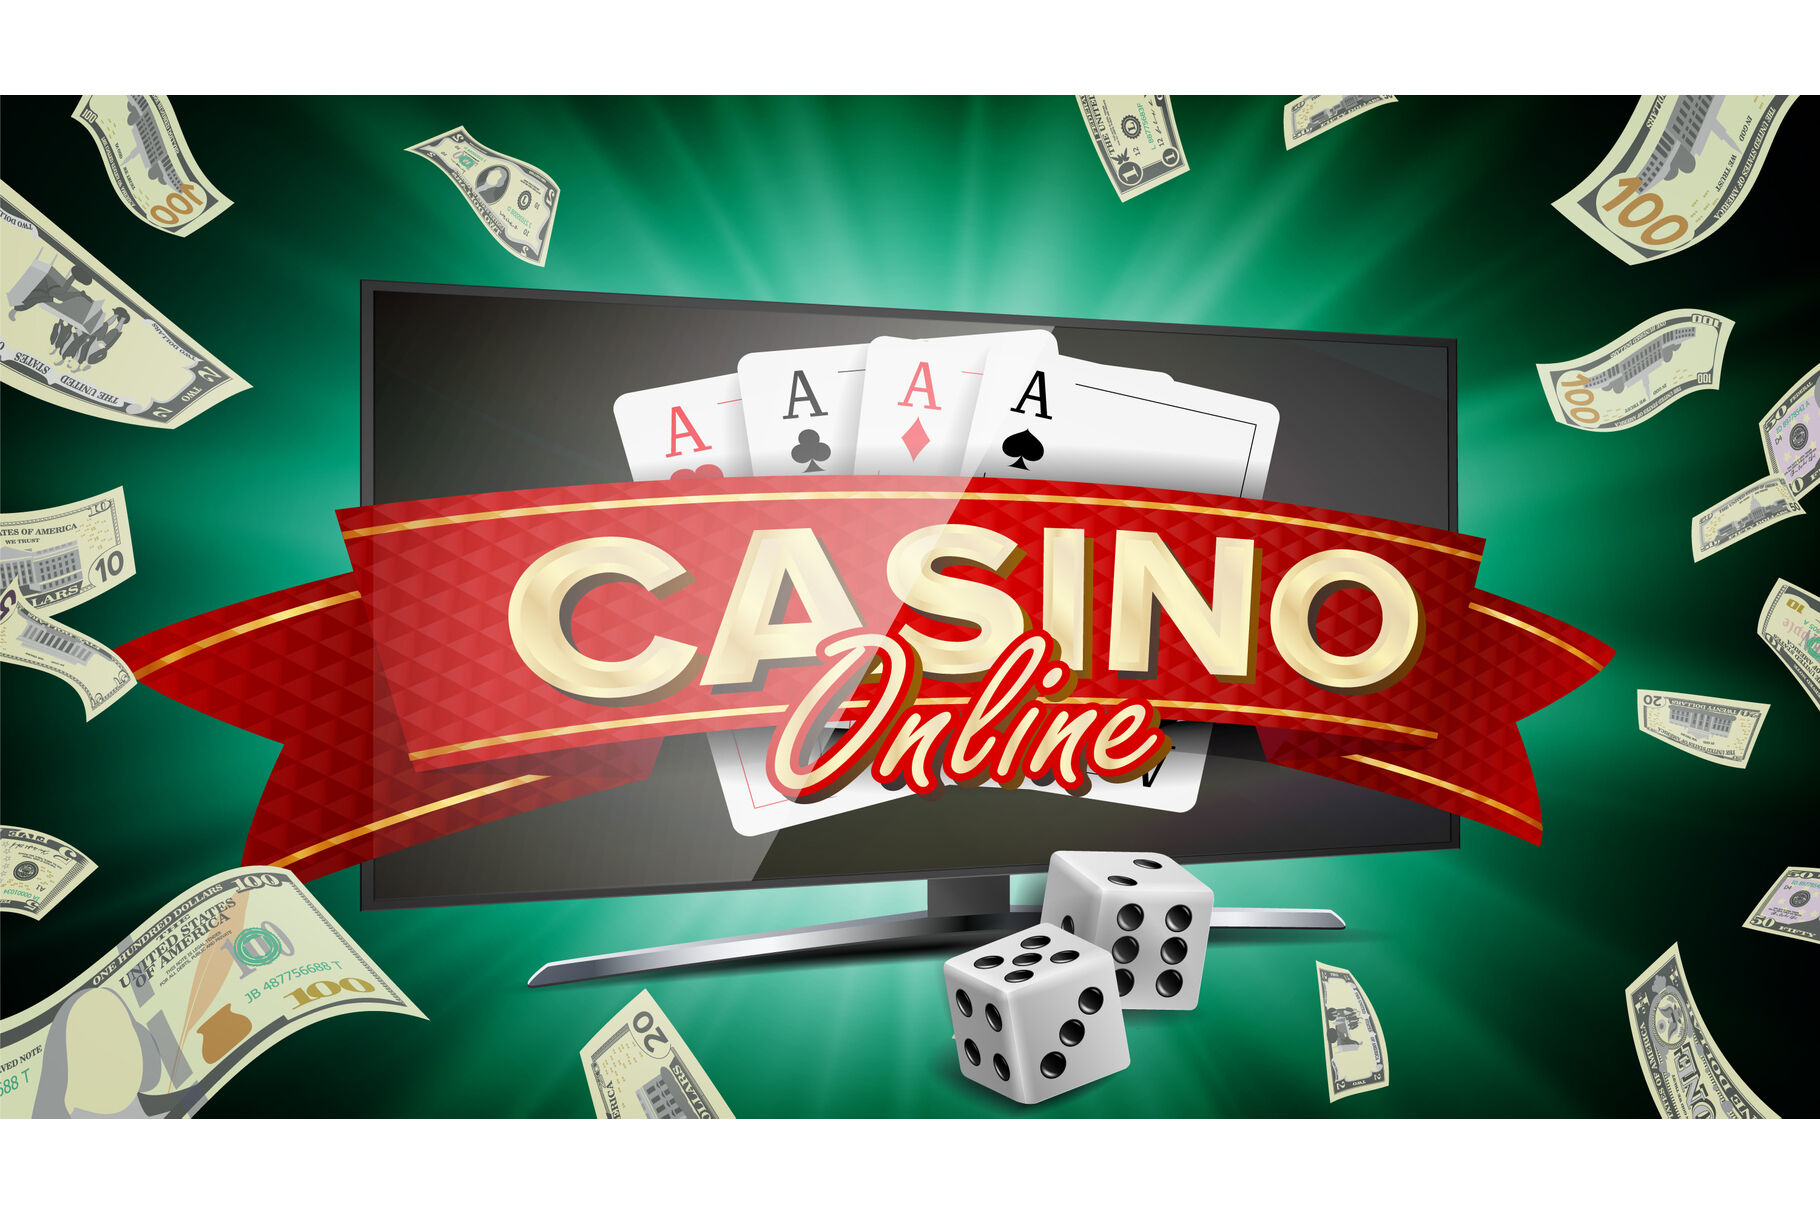 Jackpotcity online casino